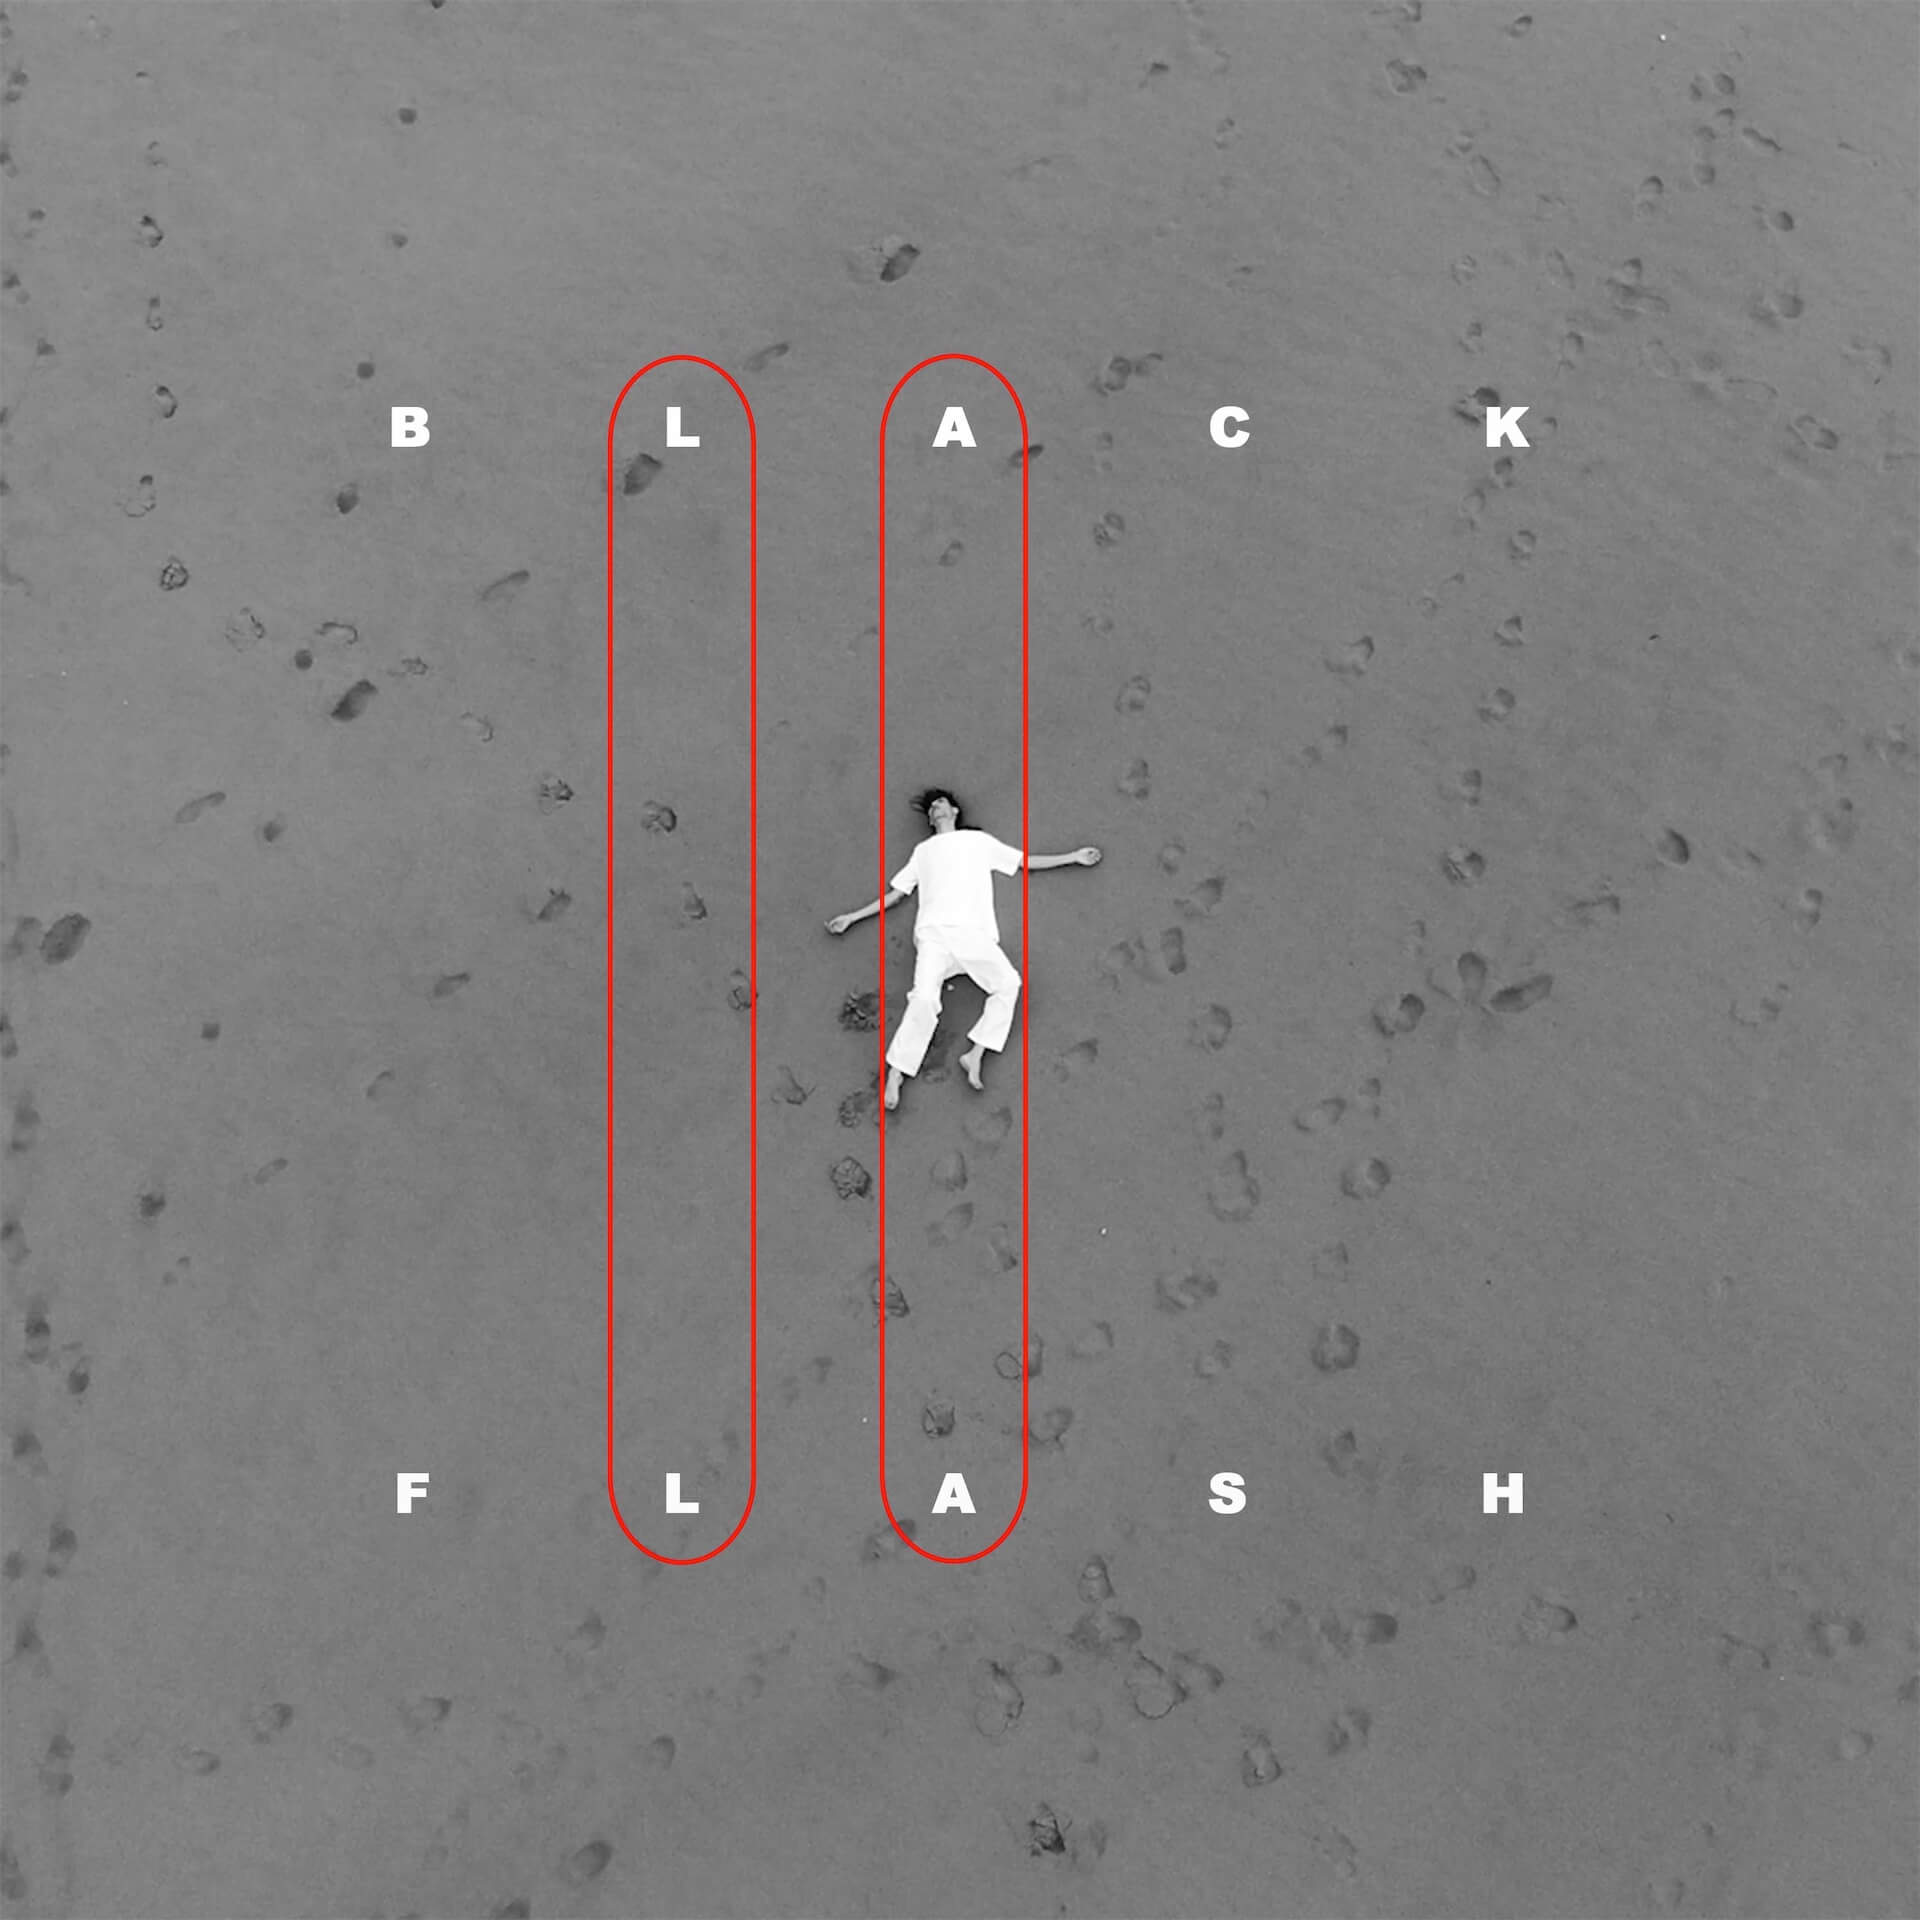 『RASEN』での活躍も話題のhomarelankaによるシングル“BLACK FLASH”がリリース決定！ミュージックビデオも明日公開 music210727_homarelanka_main